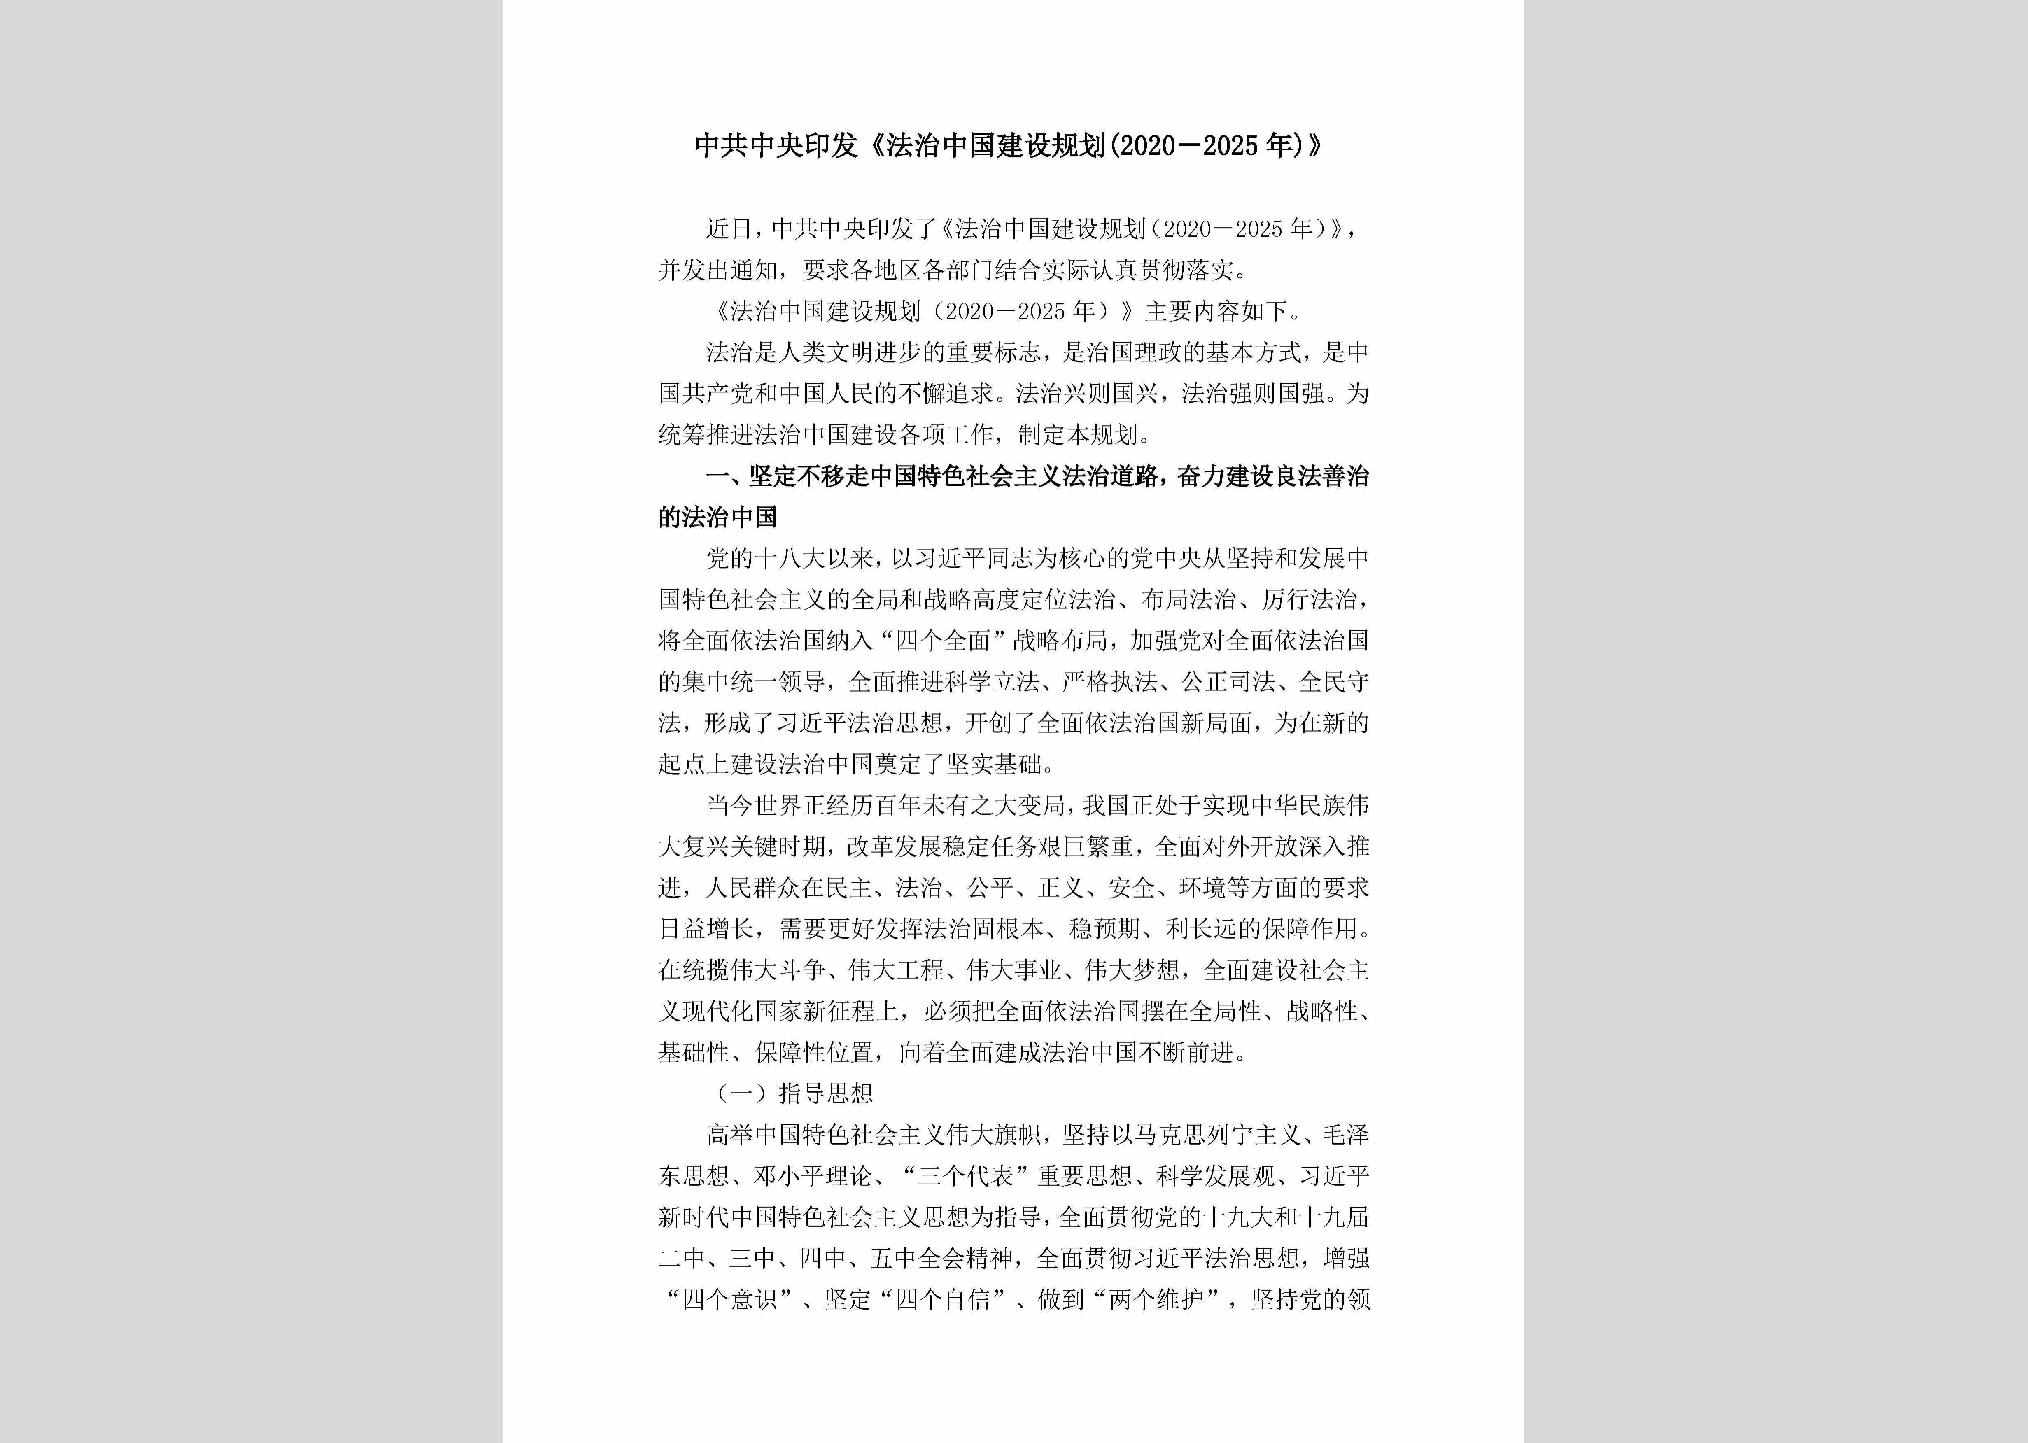 FZZGJSGH：中共中央印发《法治中国建设规划（2020-2025年）》